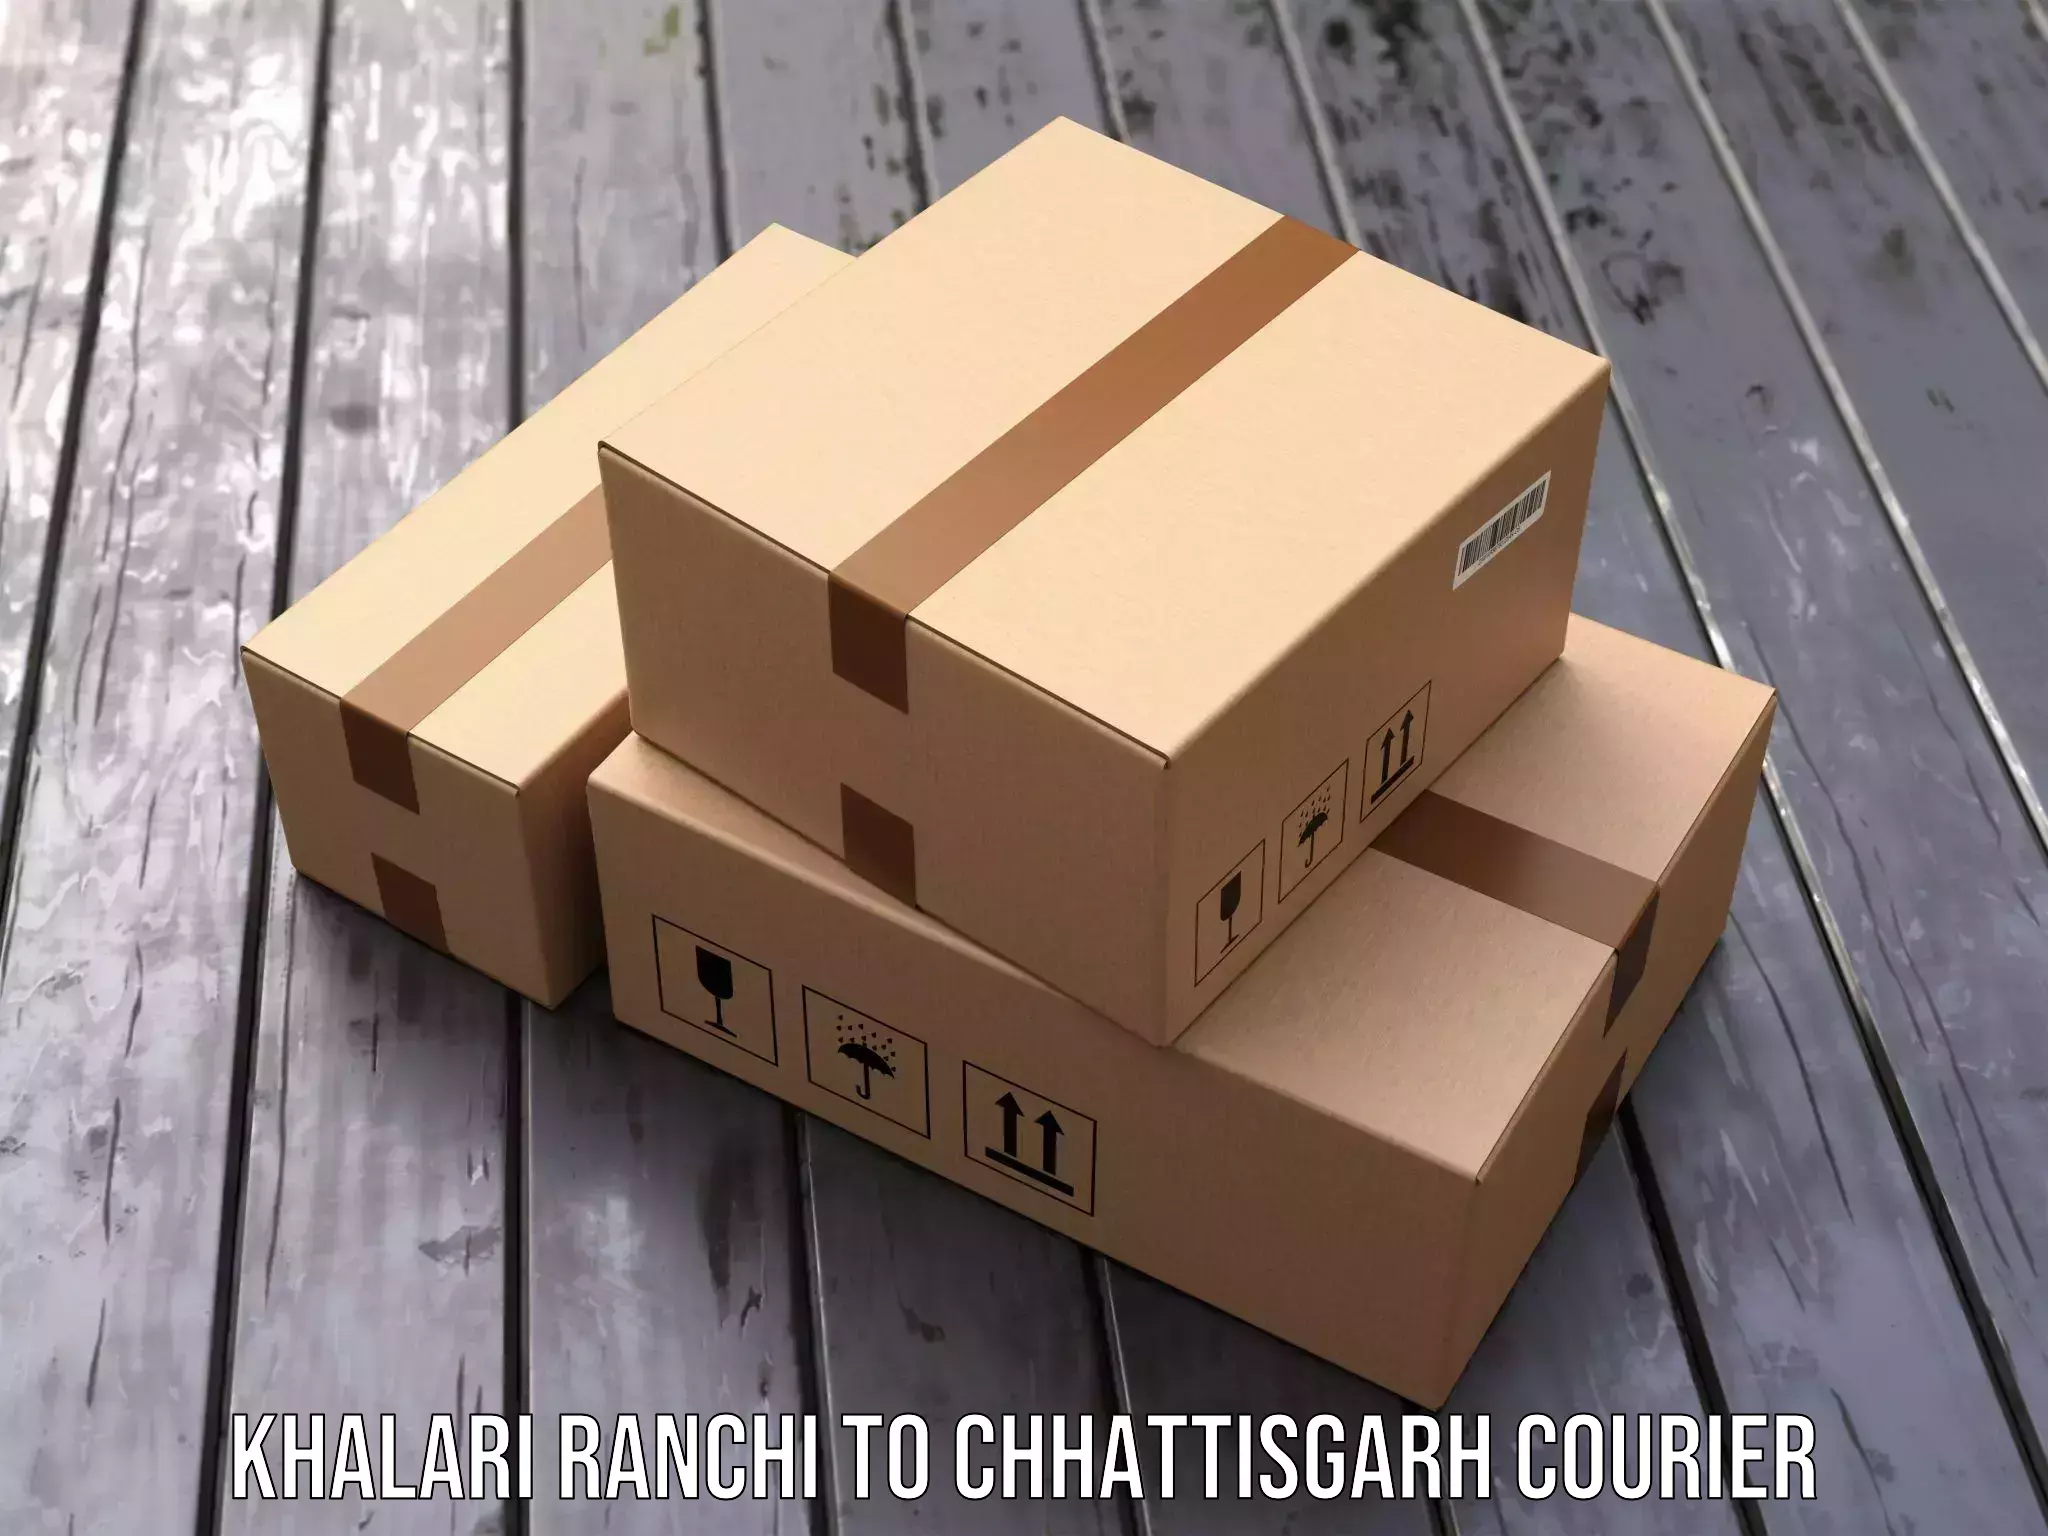 Courier service partnerships Khalari Ranchi to Bilaspur